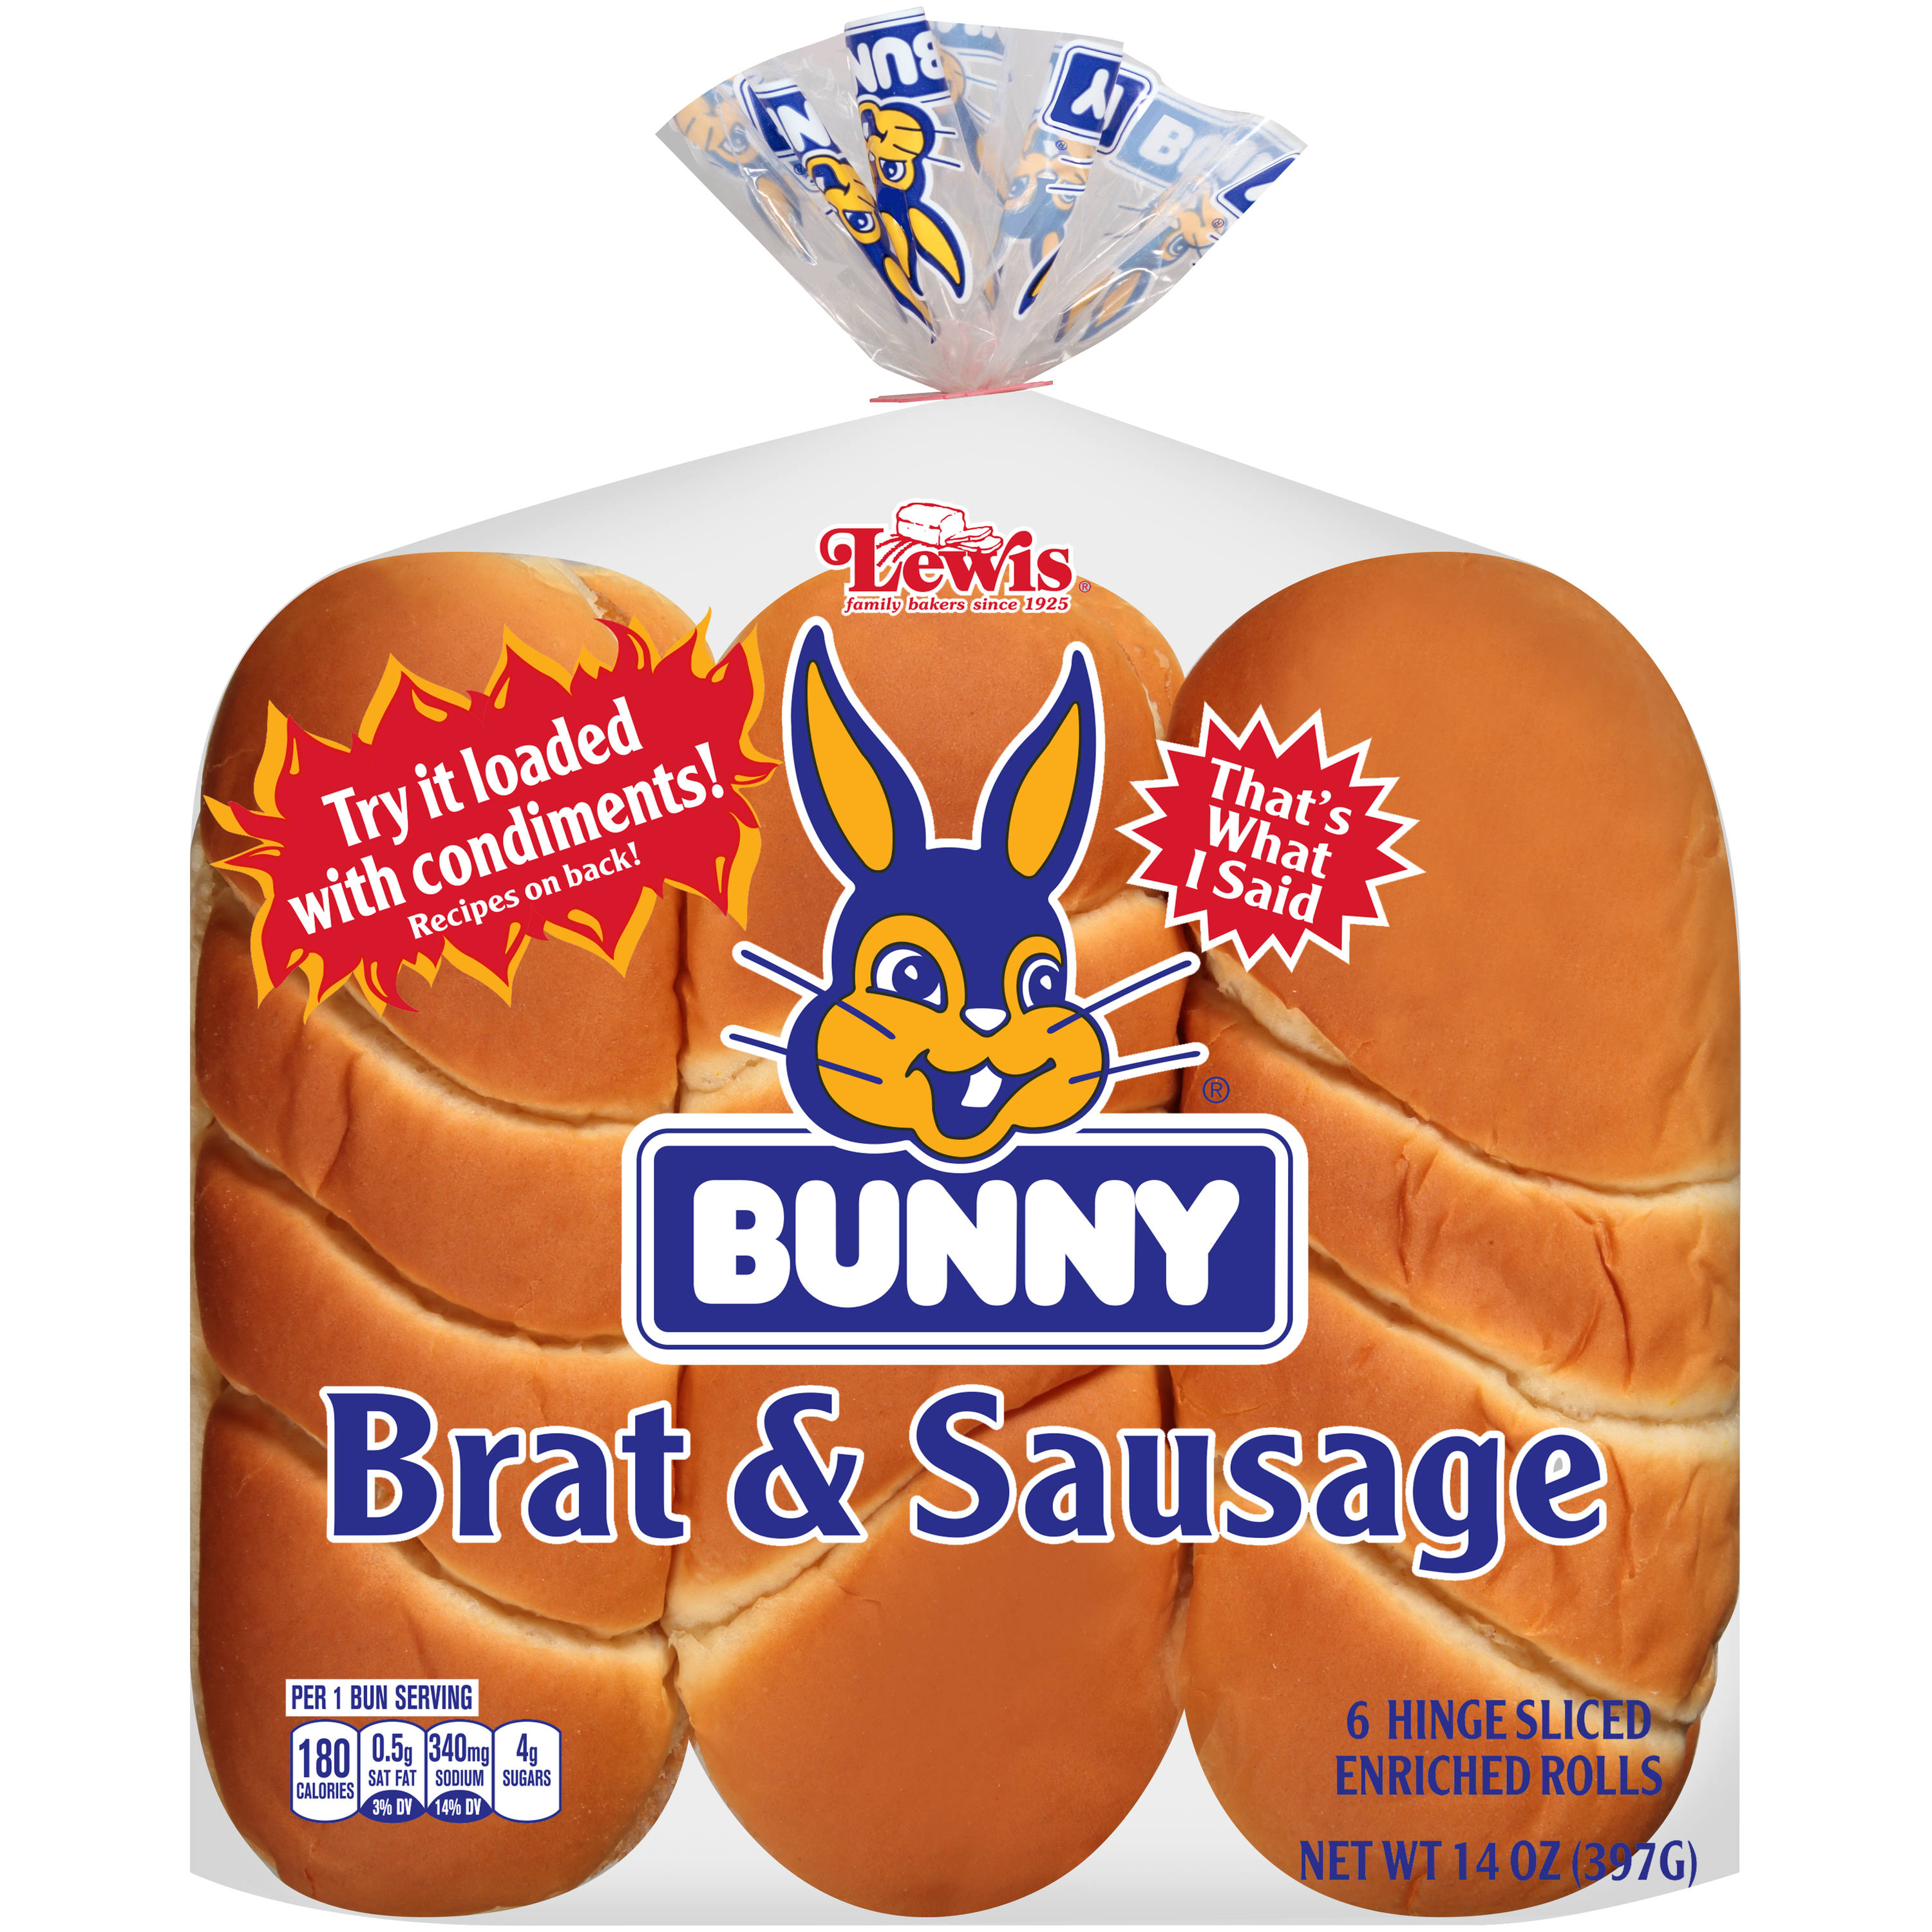 Bunny Rolls, Brat & Sausage, Original - 6 rolls, 14 oz